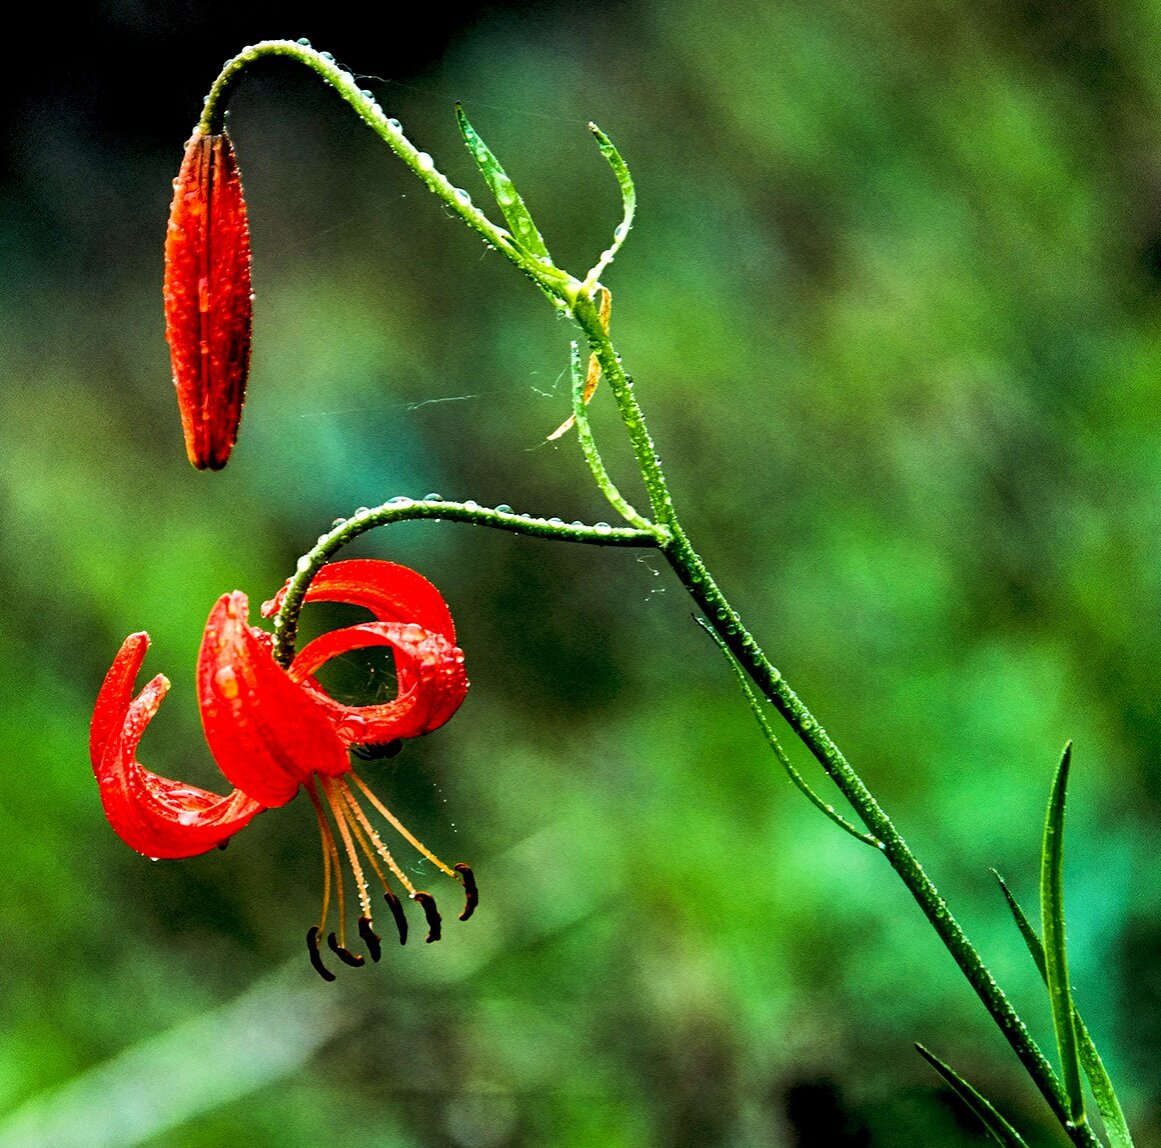 Саранка Байкальская цветок